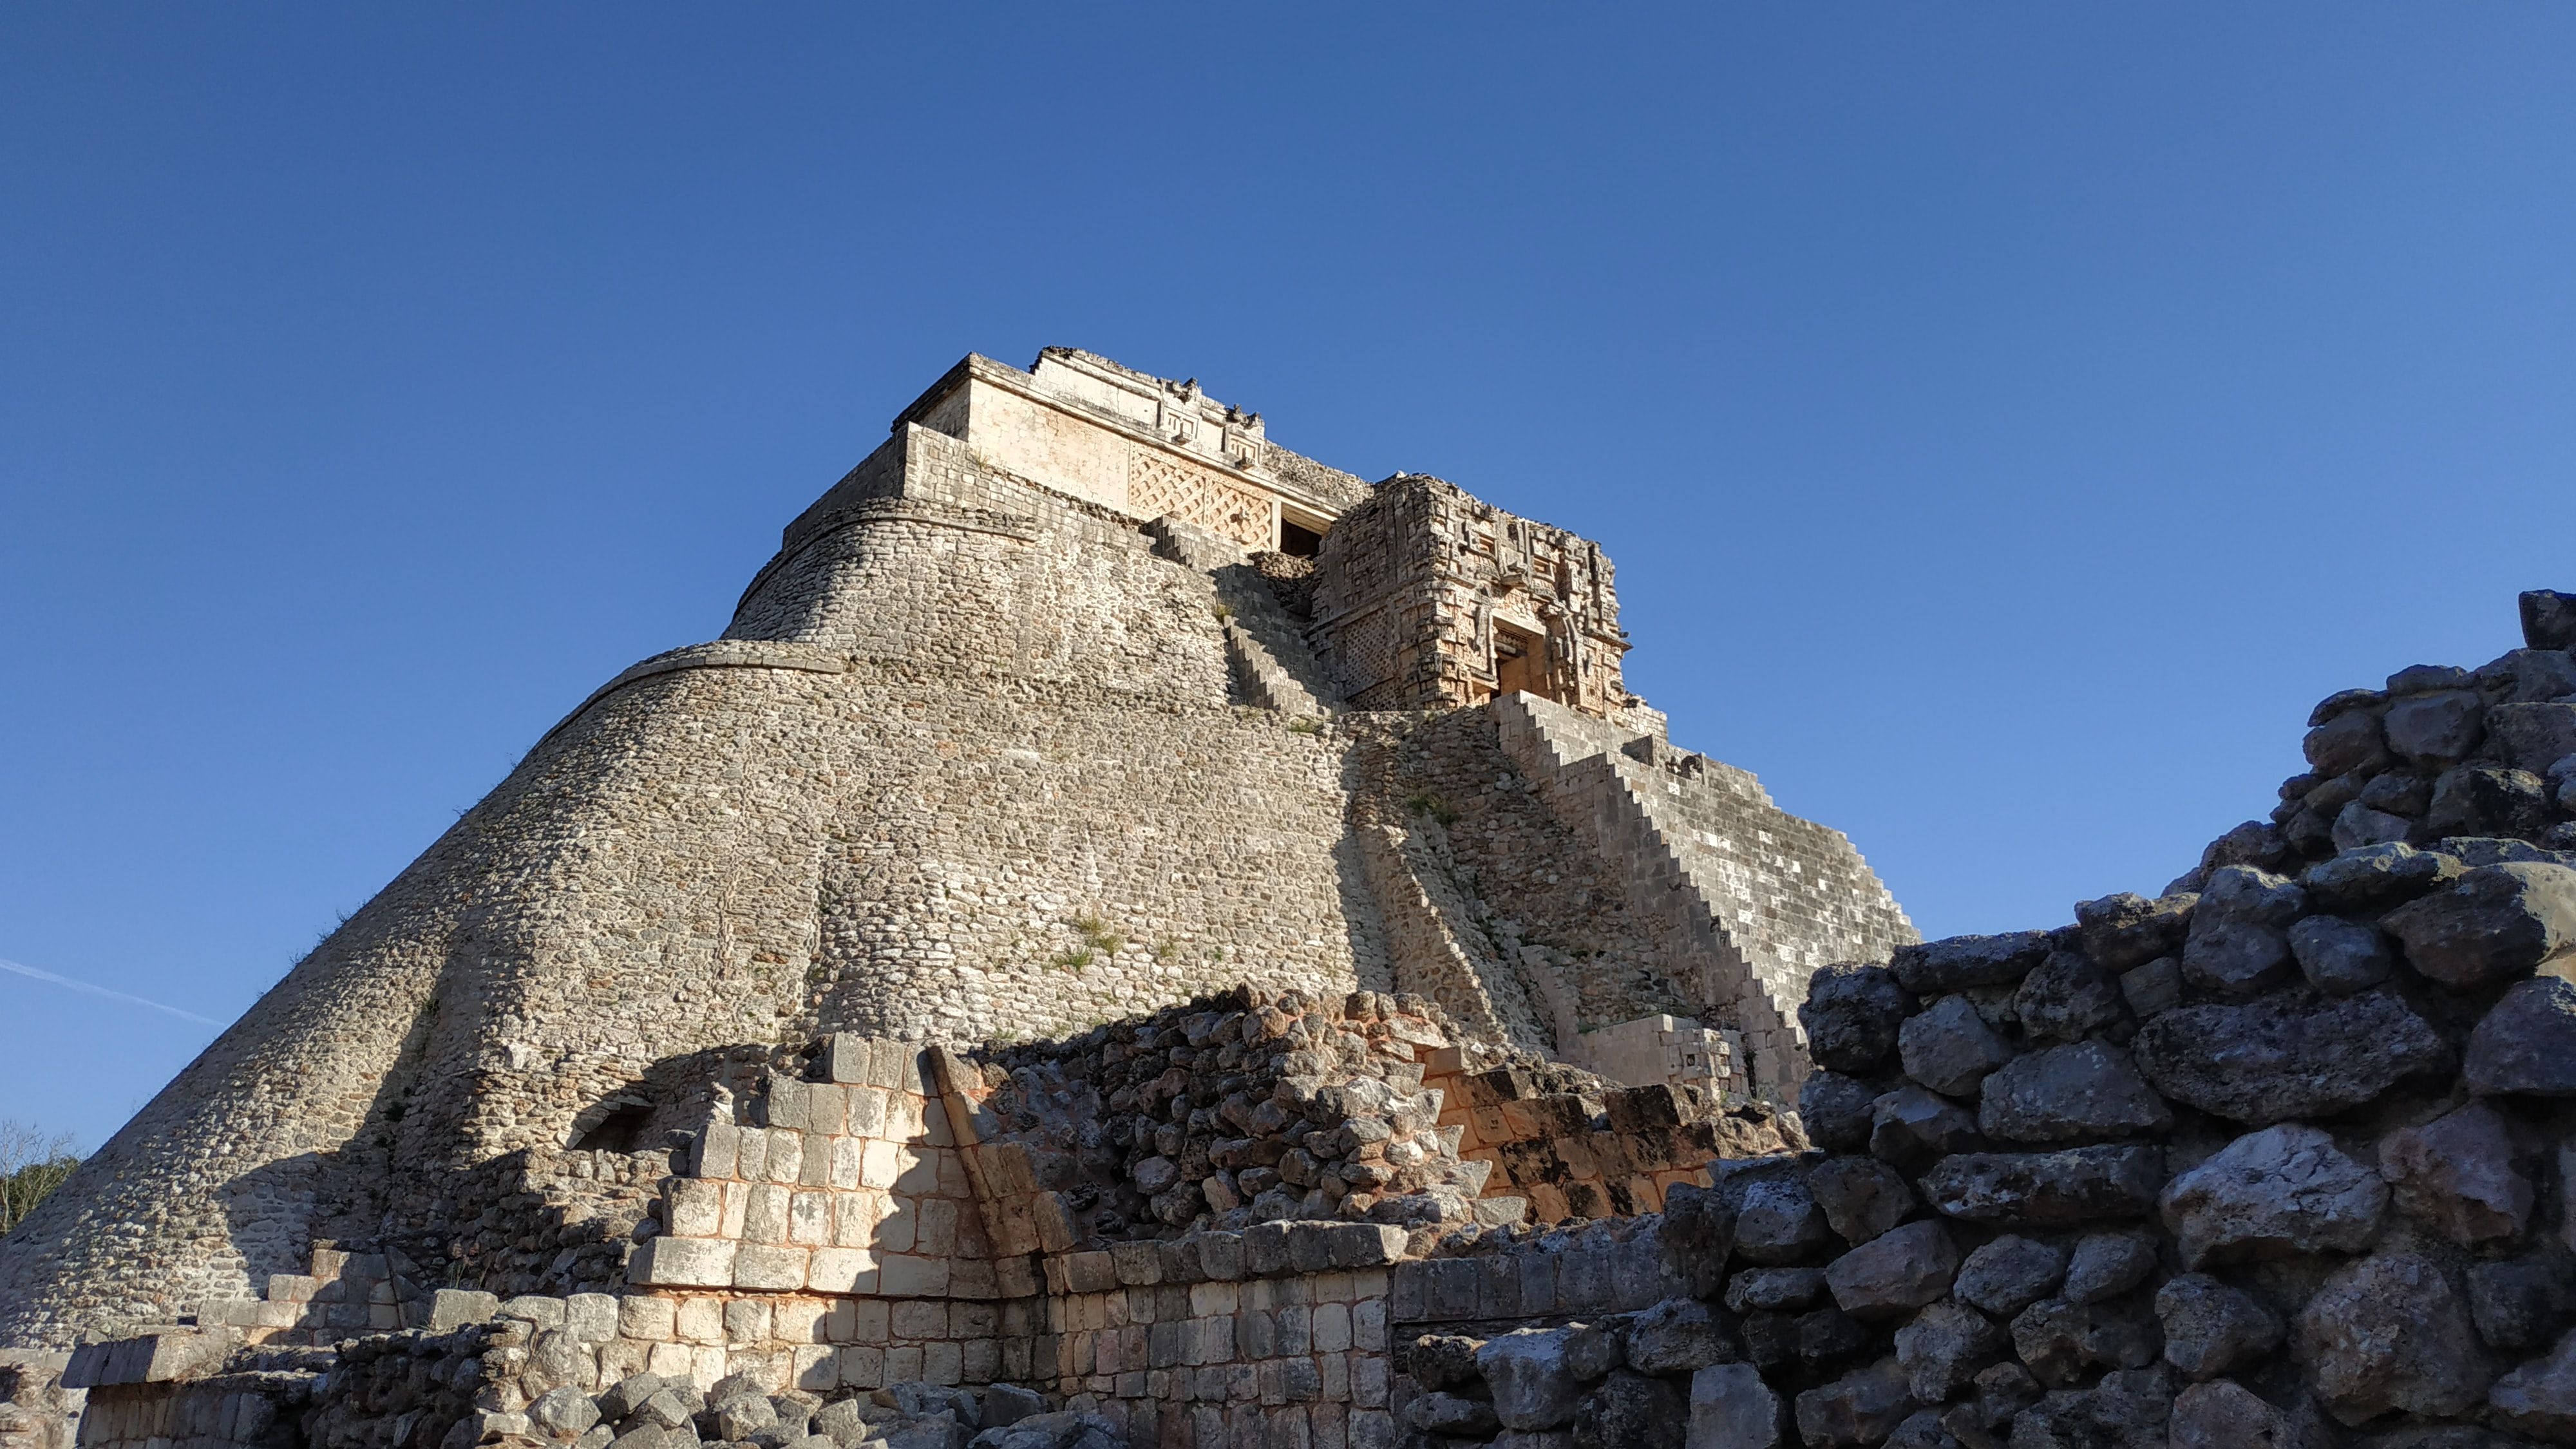 The main pyramid in Uxmal, Yucatan, Mexico